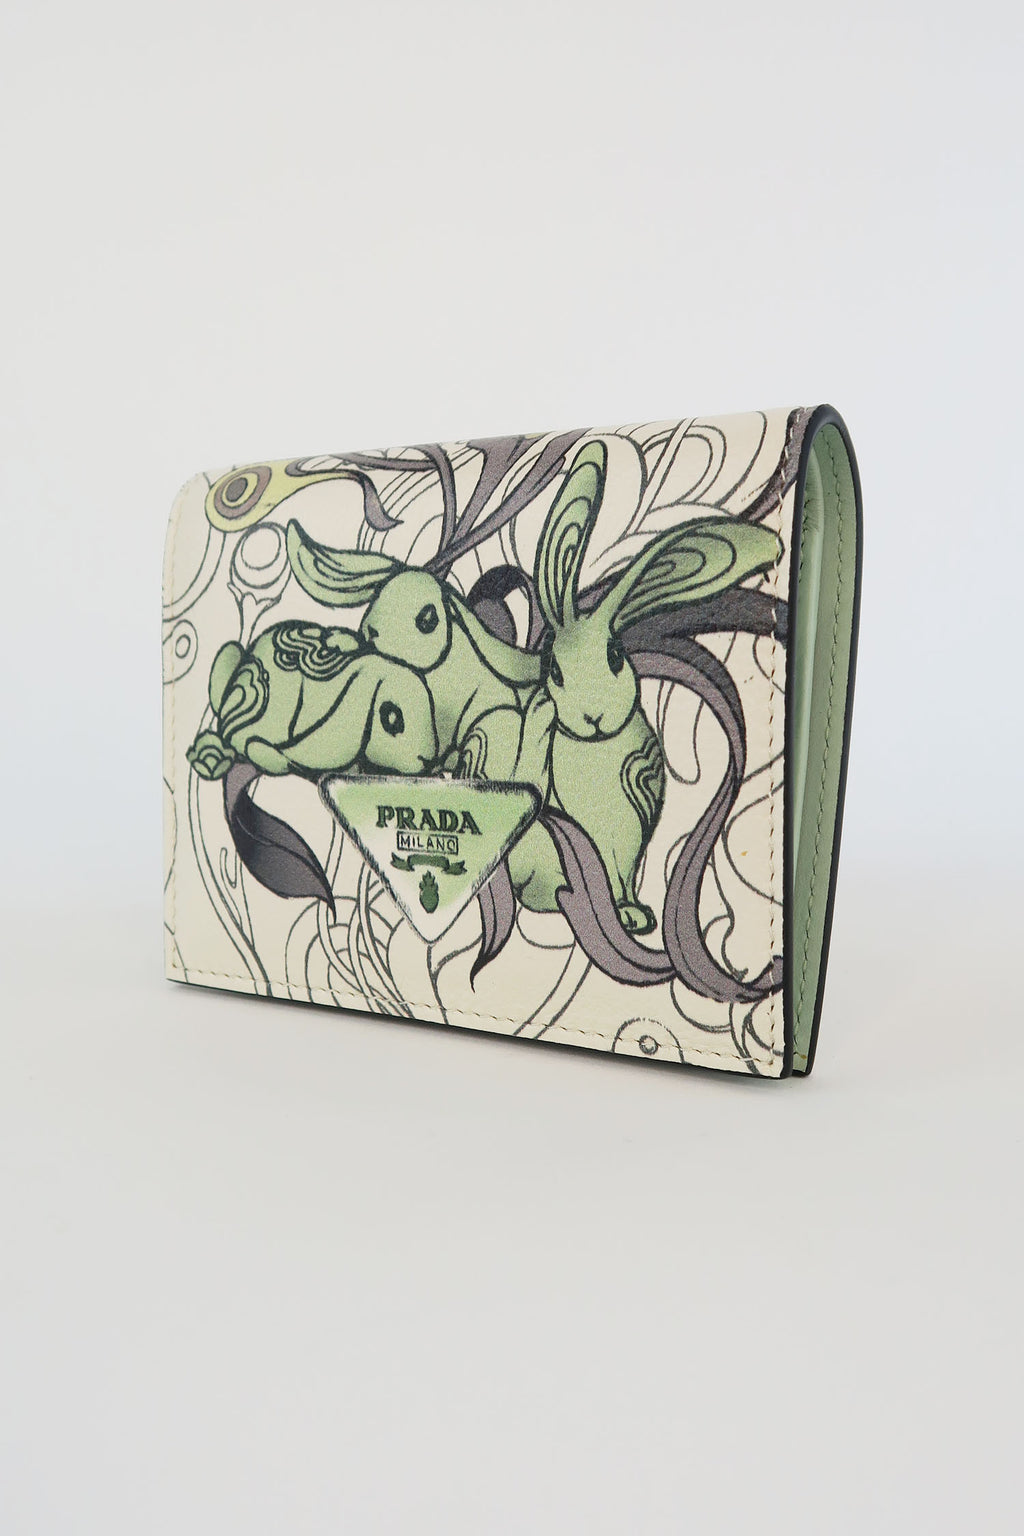 Prada Rabbit Print Compact Wallet – The Find Studio